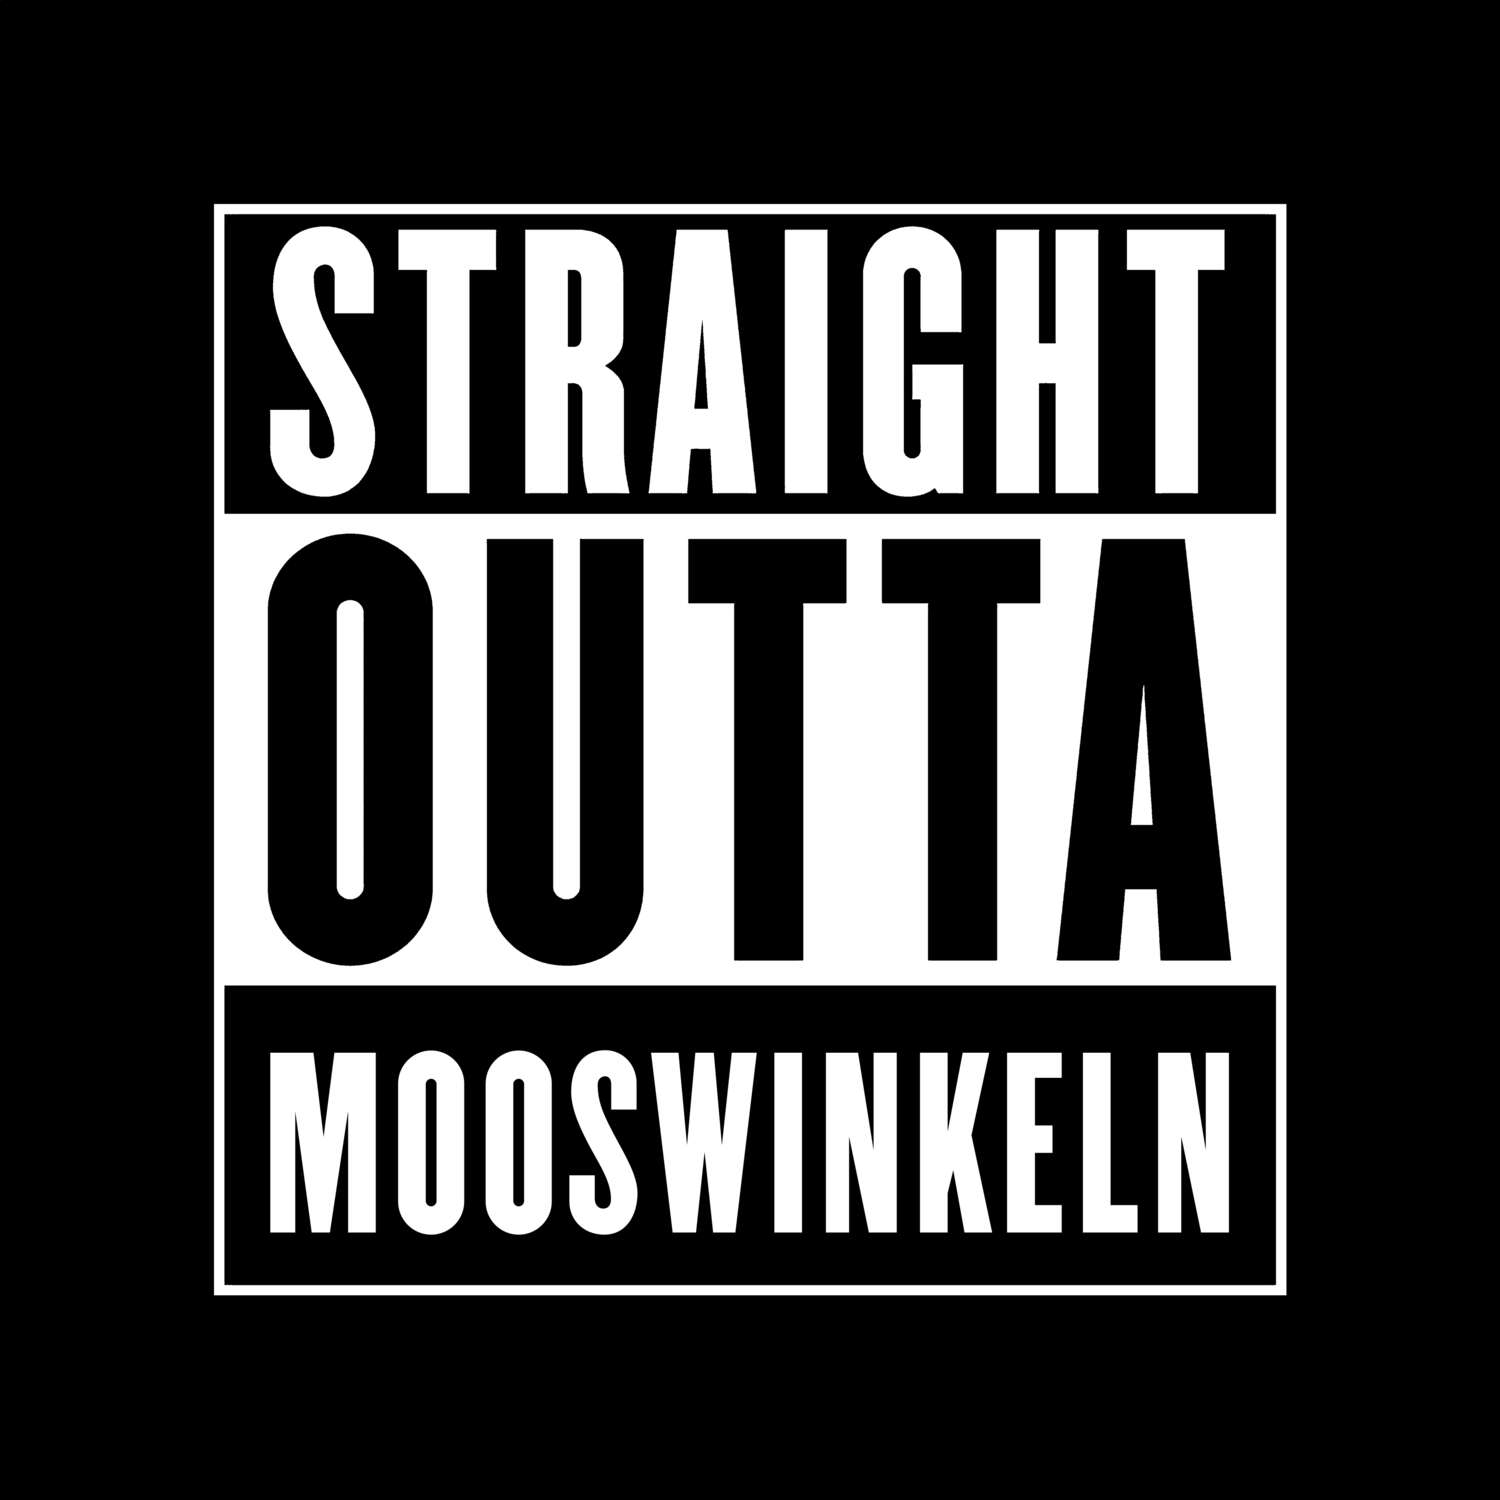 Mooswinkeln T-Shirt »Straight Outta«